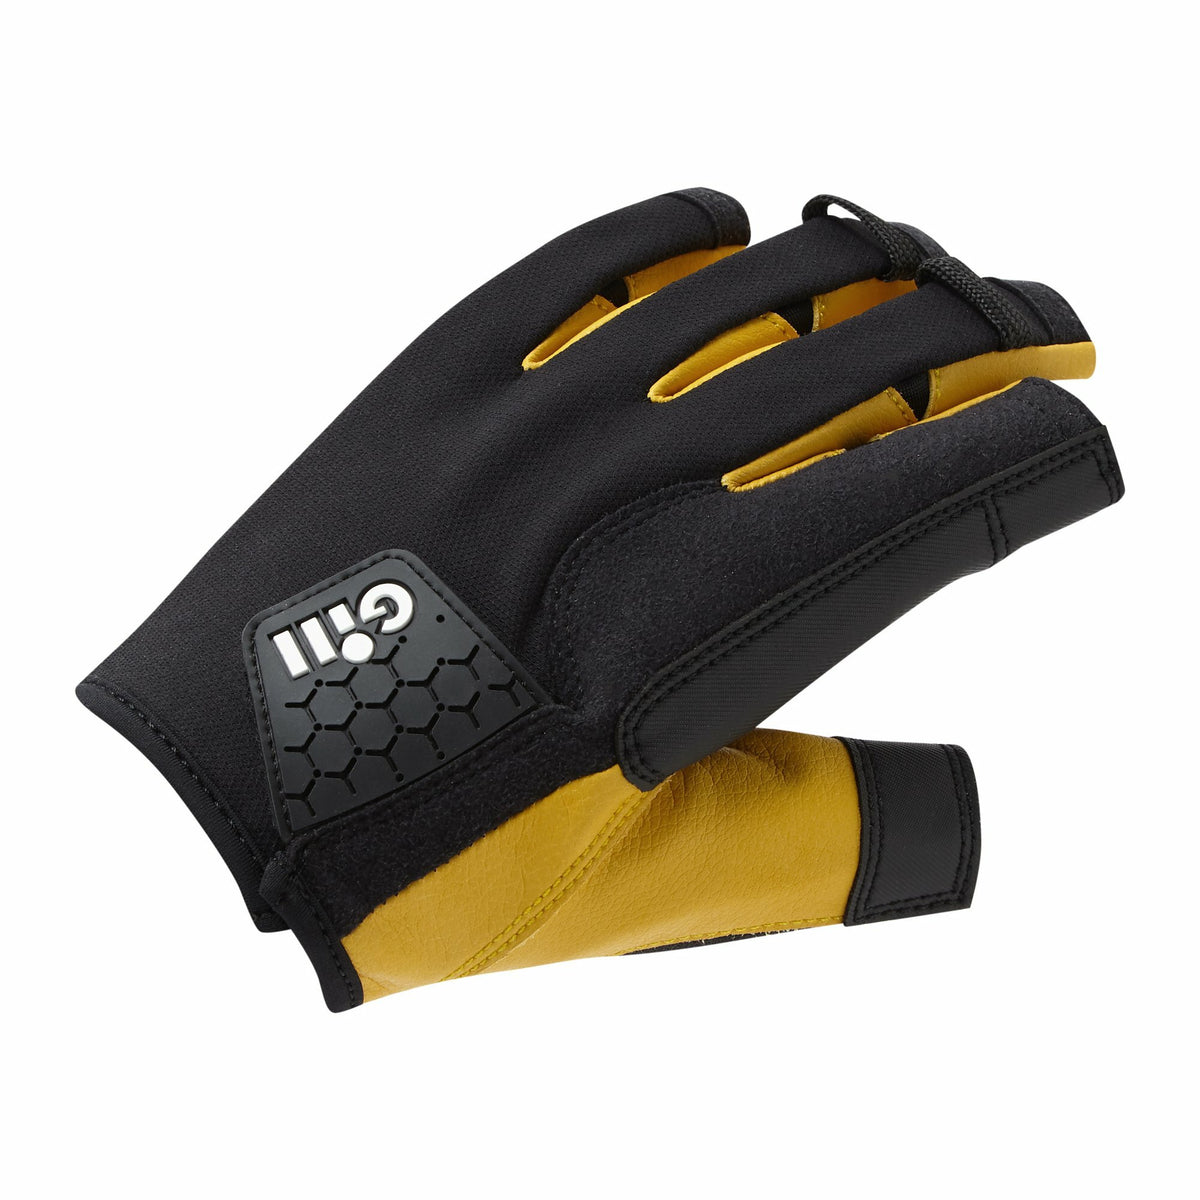 Gill Pro Short finger Gloves 7443